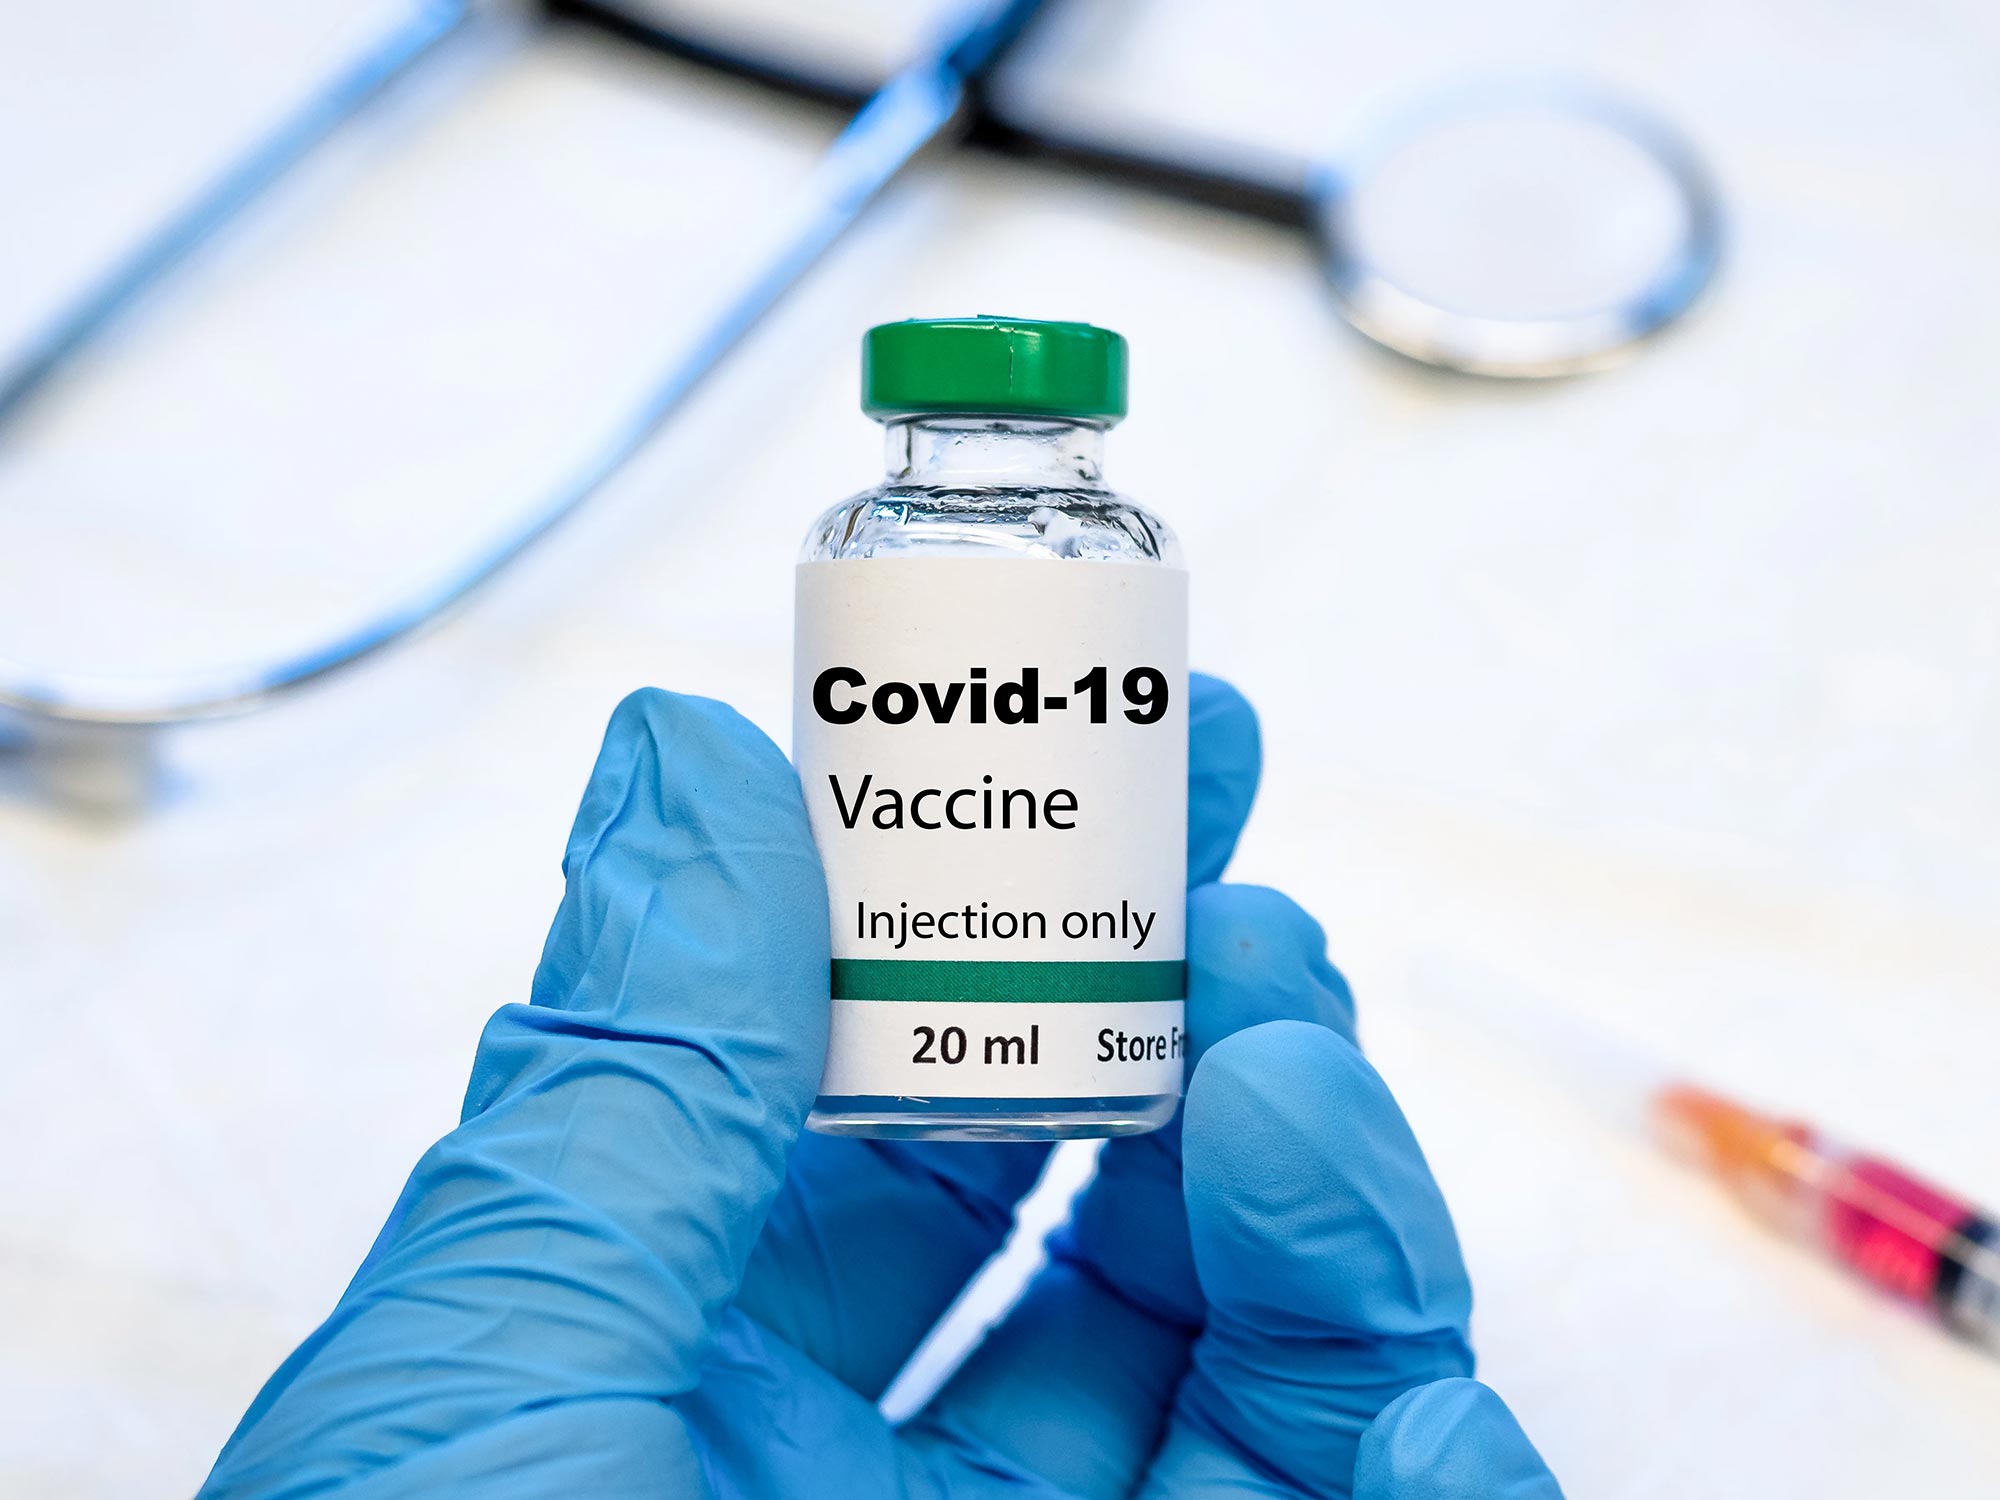 cvs covid vaccine